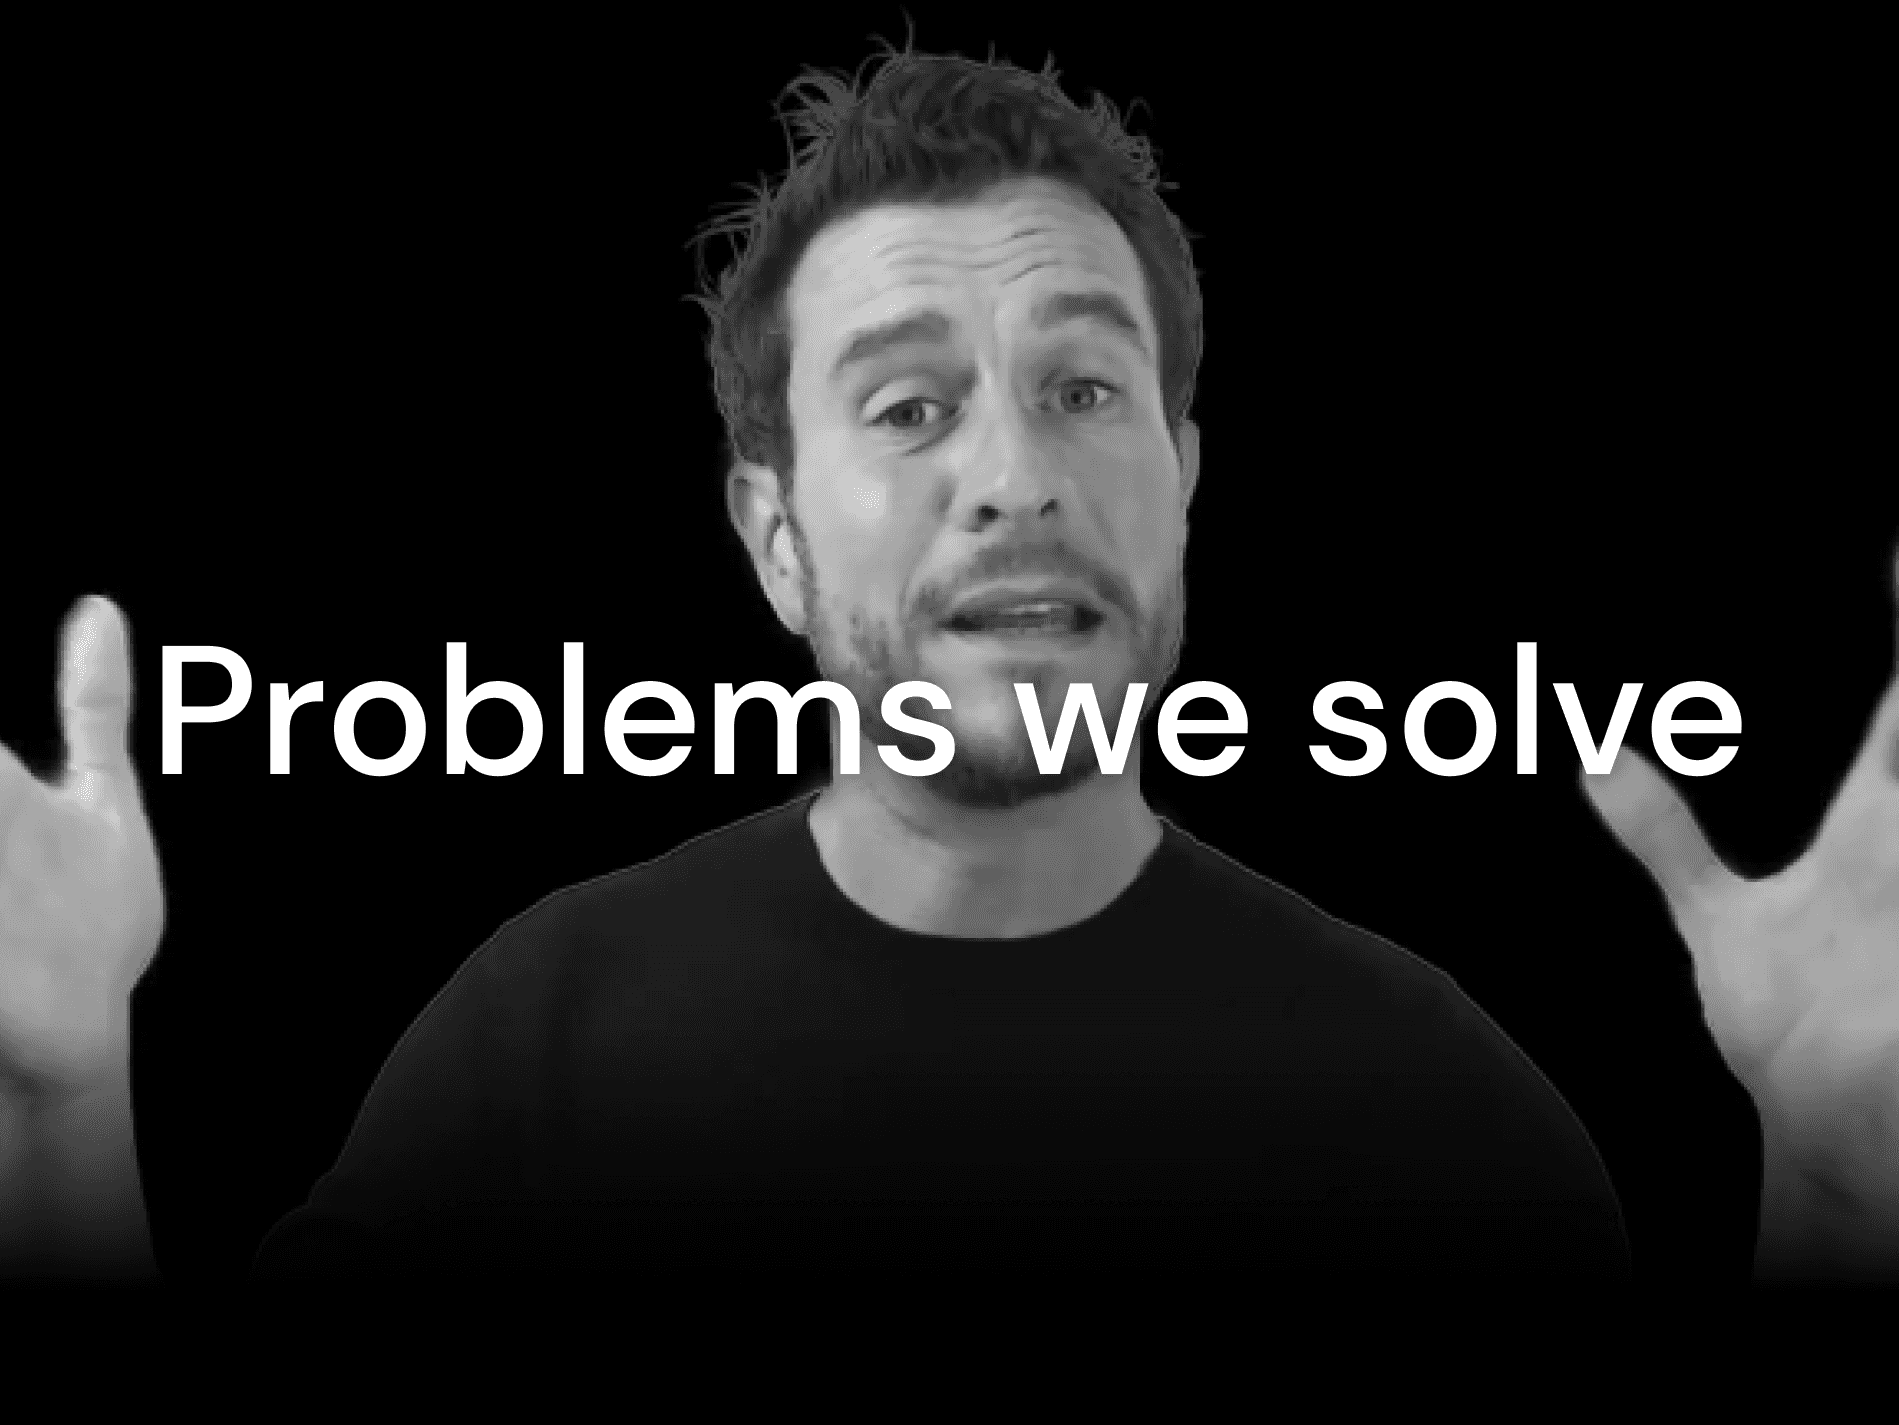 Po3 problems we solve